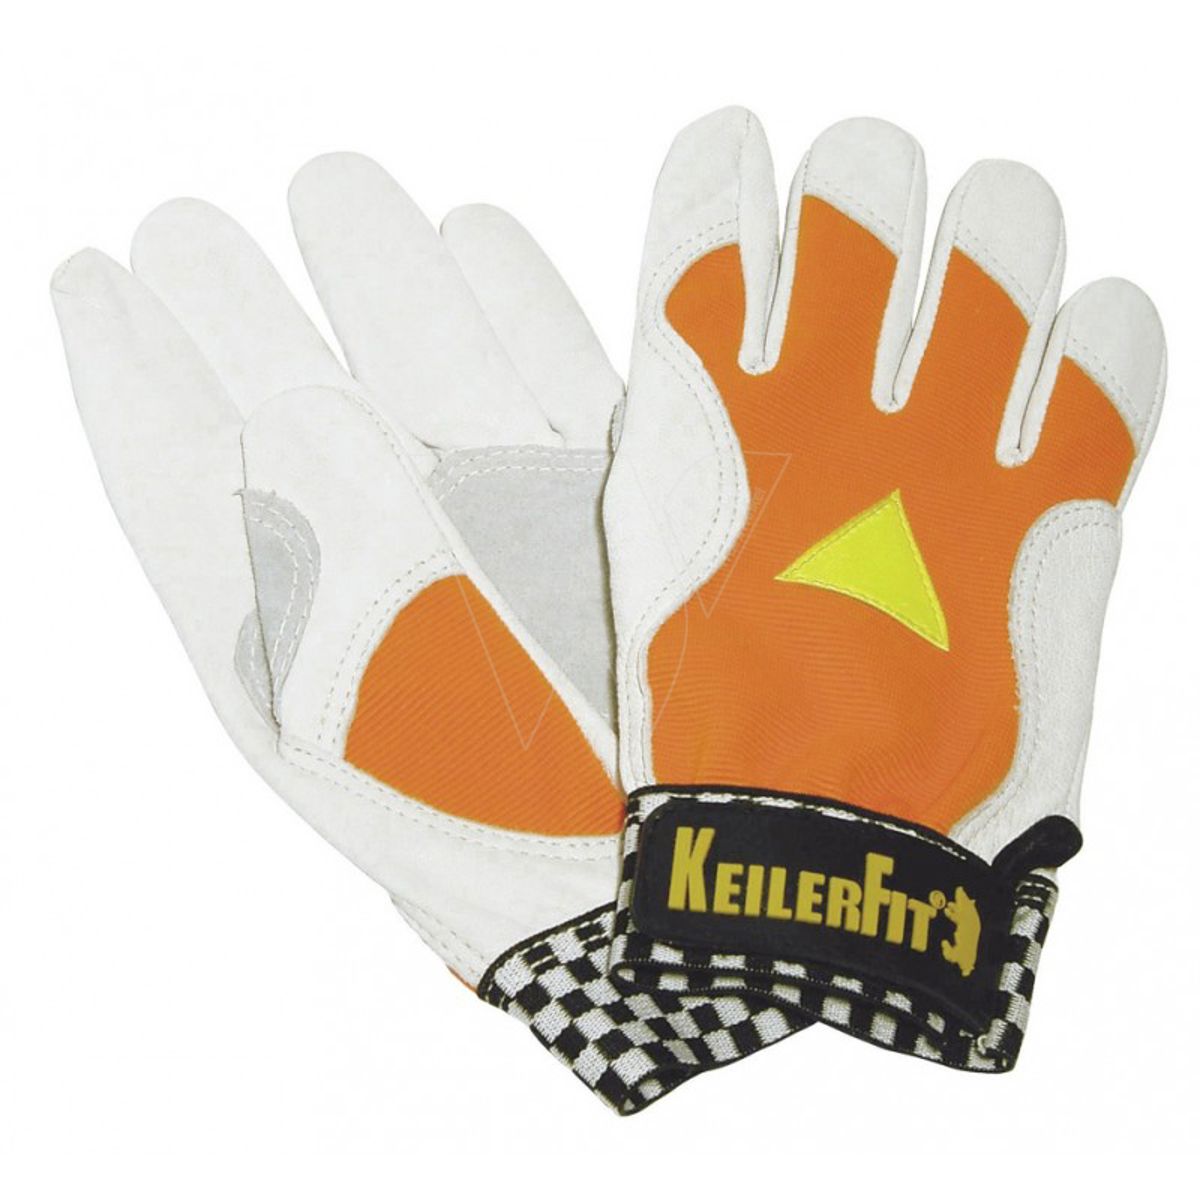 Keilerfit work glove nappa leather 10